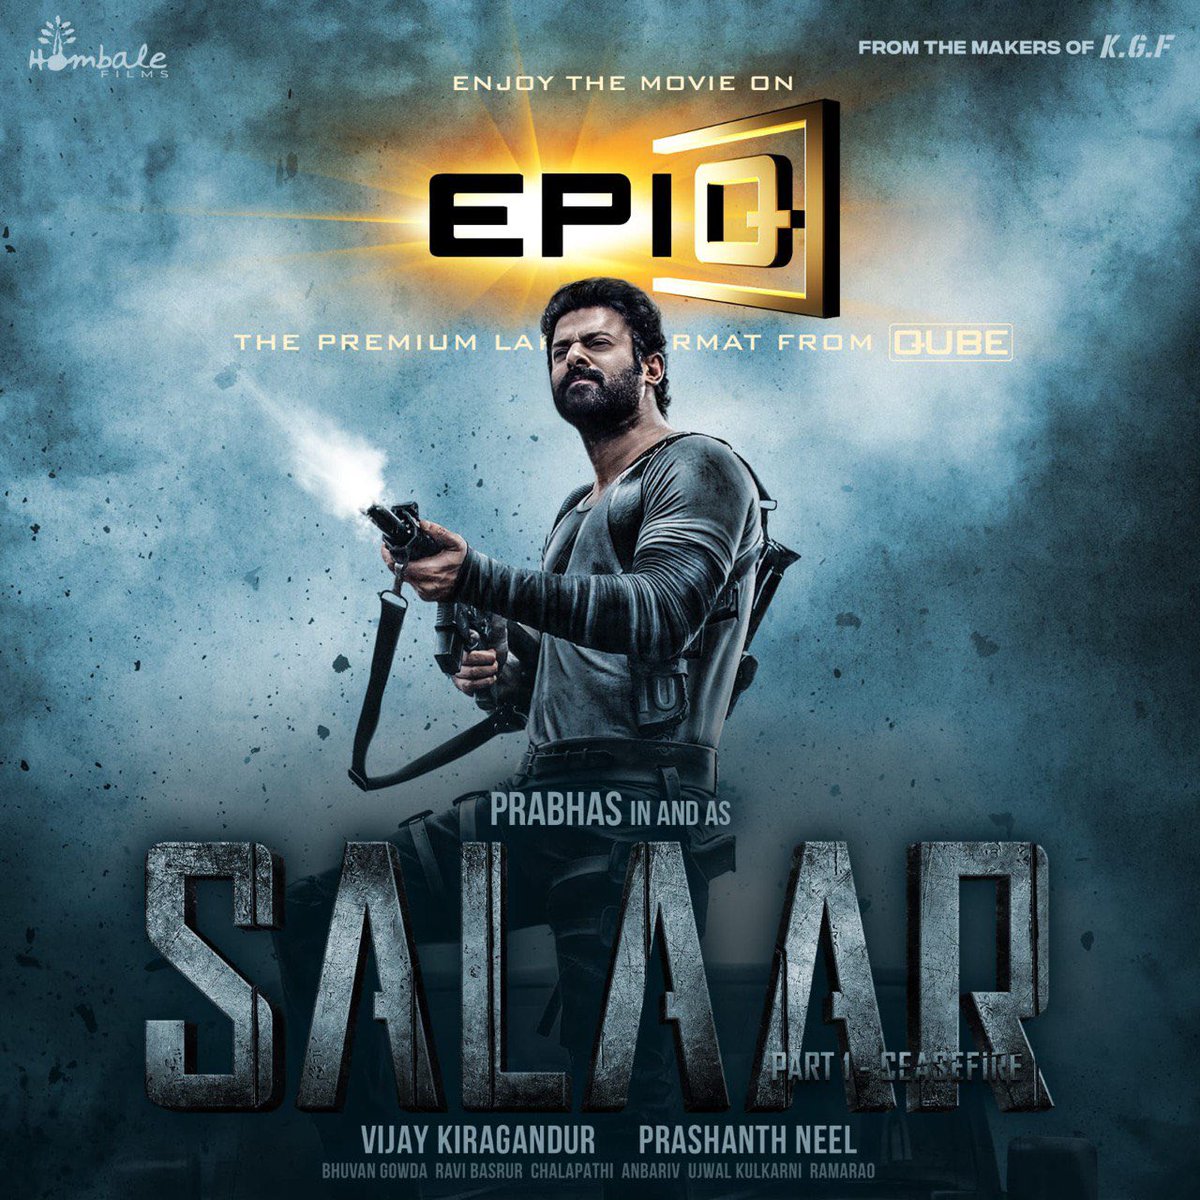 Experience  #Salaar in Epiq format exclusively at V Celluloids, Sullurpeta & Broadway Cinemas, Coimbatore 💥

In Cinemas from December 22nd!

#SalaarCeaseFire  #Prabhas